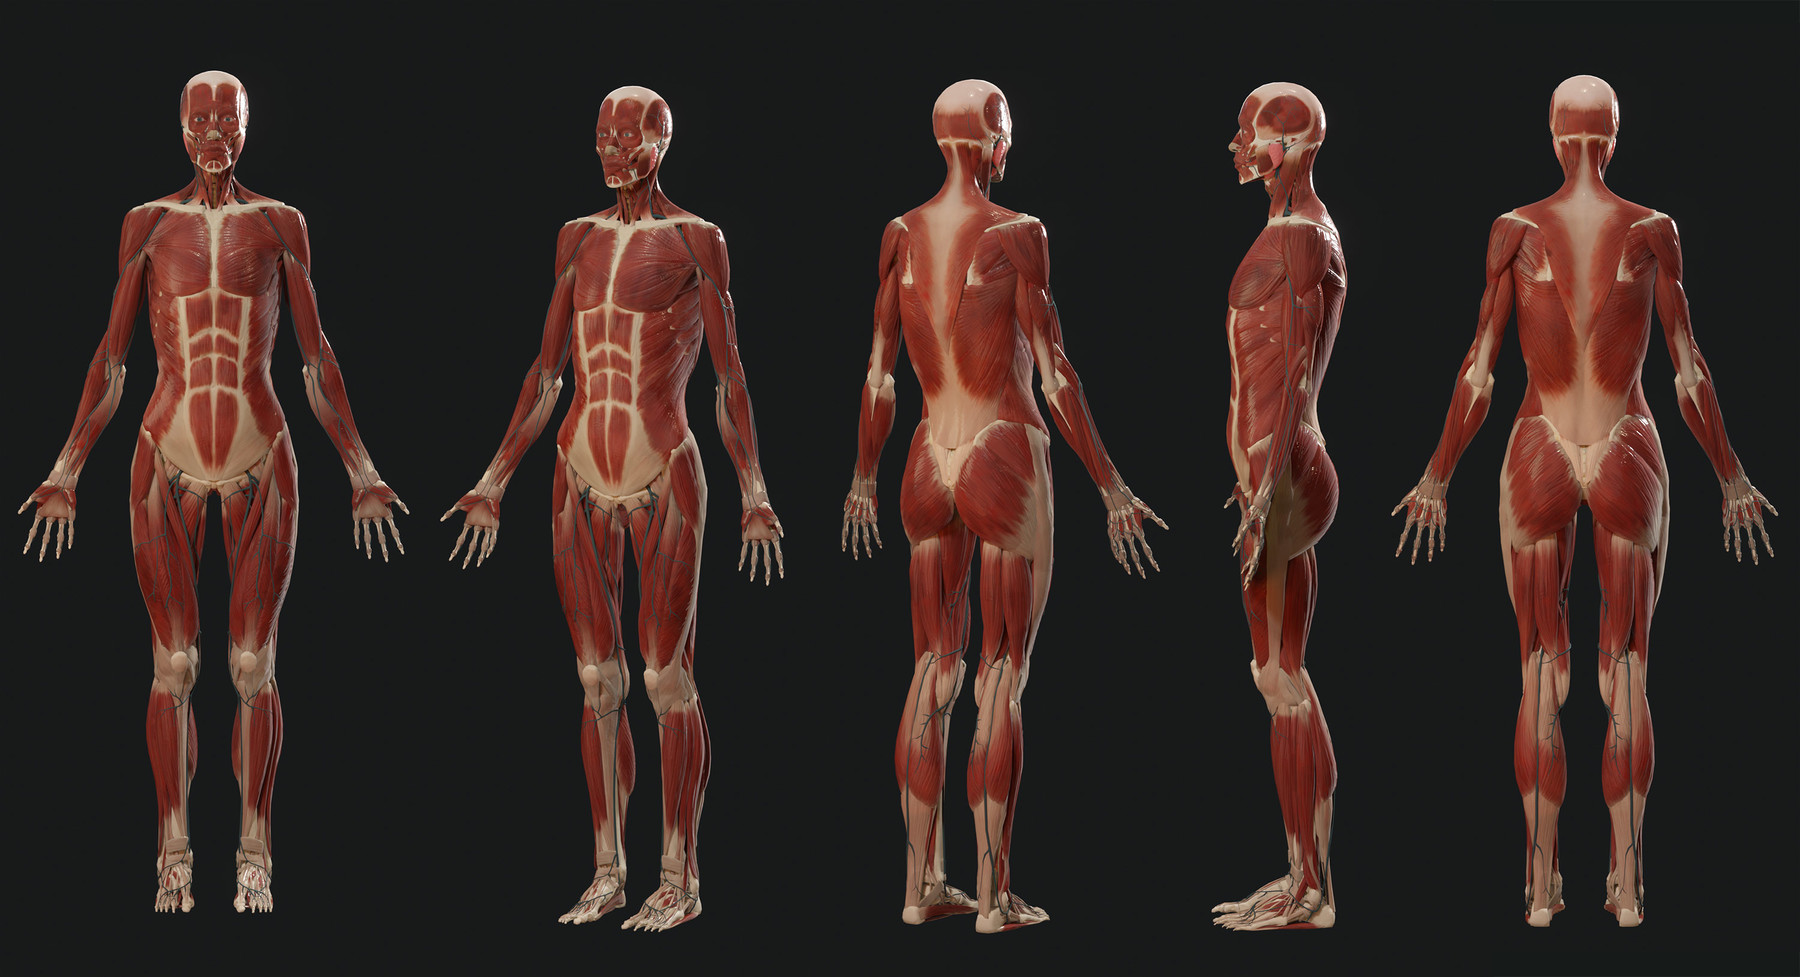 muscle models anatomy